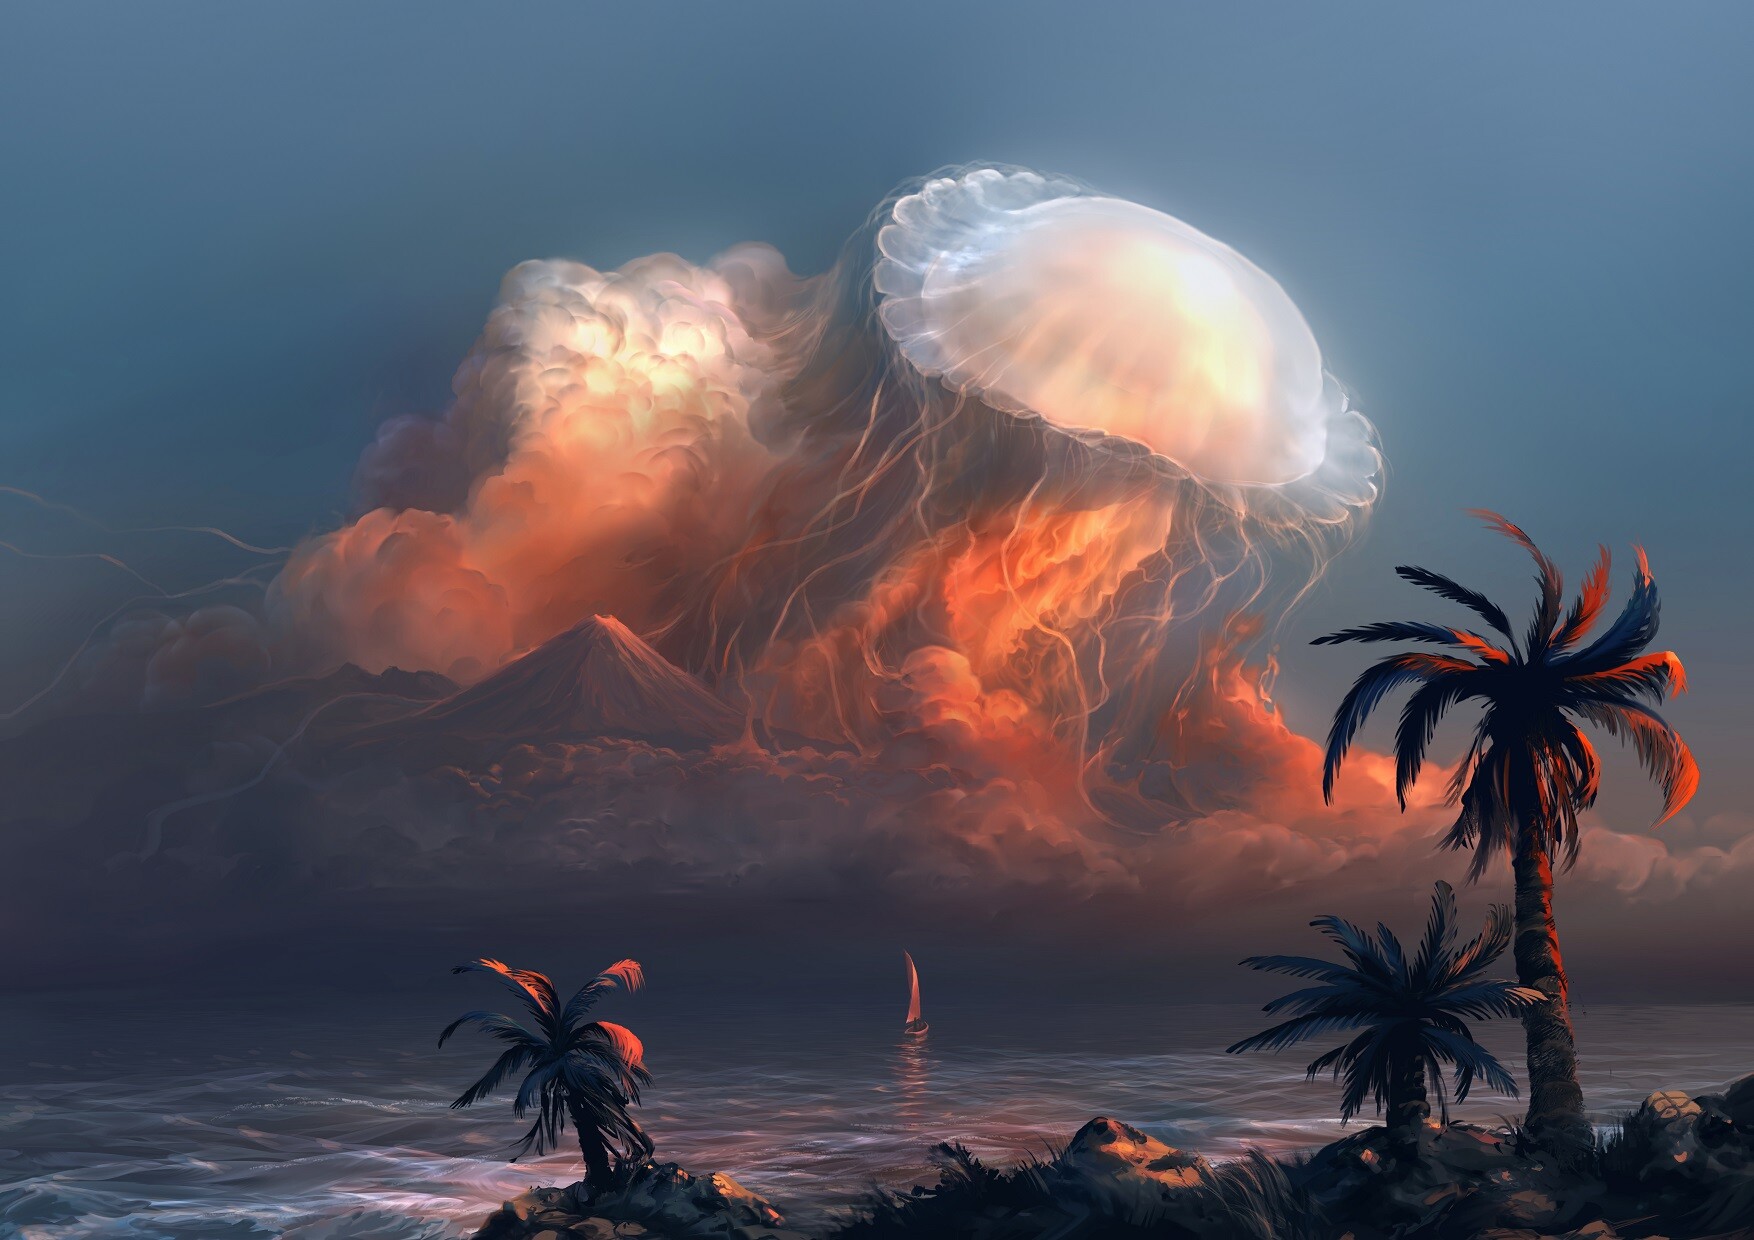 Surreal Jellyfish Clouds Tropical Island Palm Trees Sailboats Mountains Alex Rommel Digital Art Sea 1754x1240